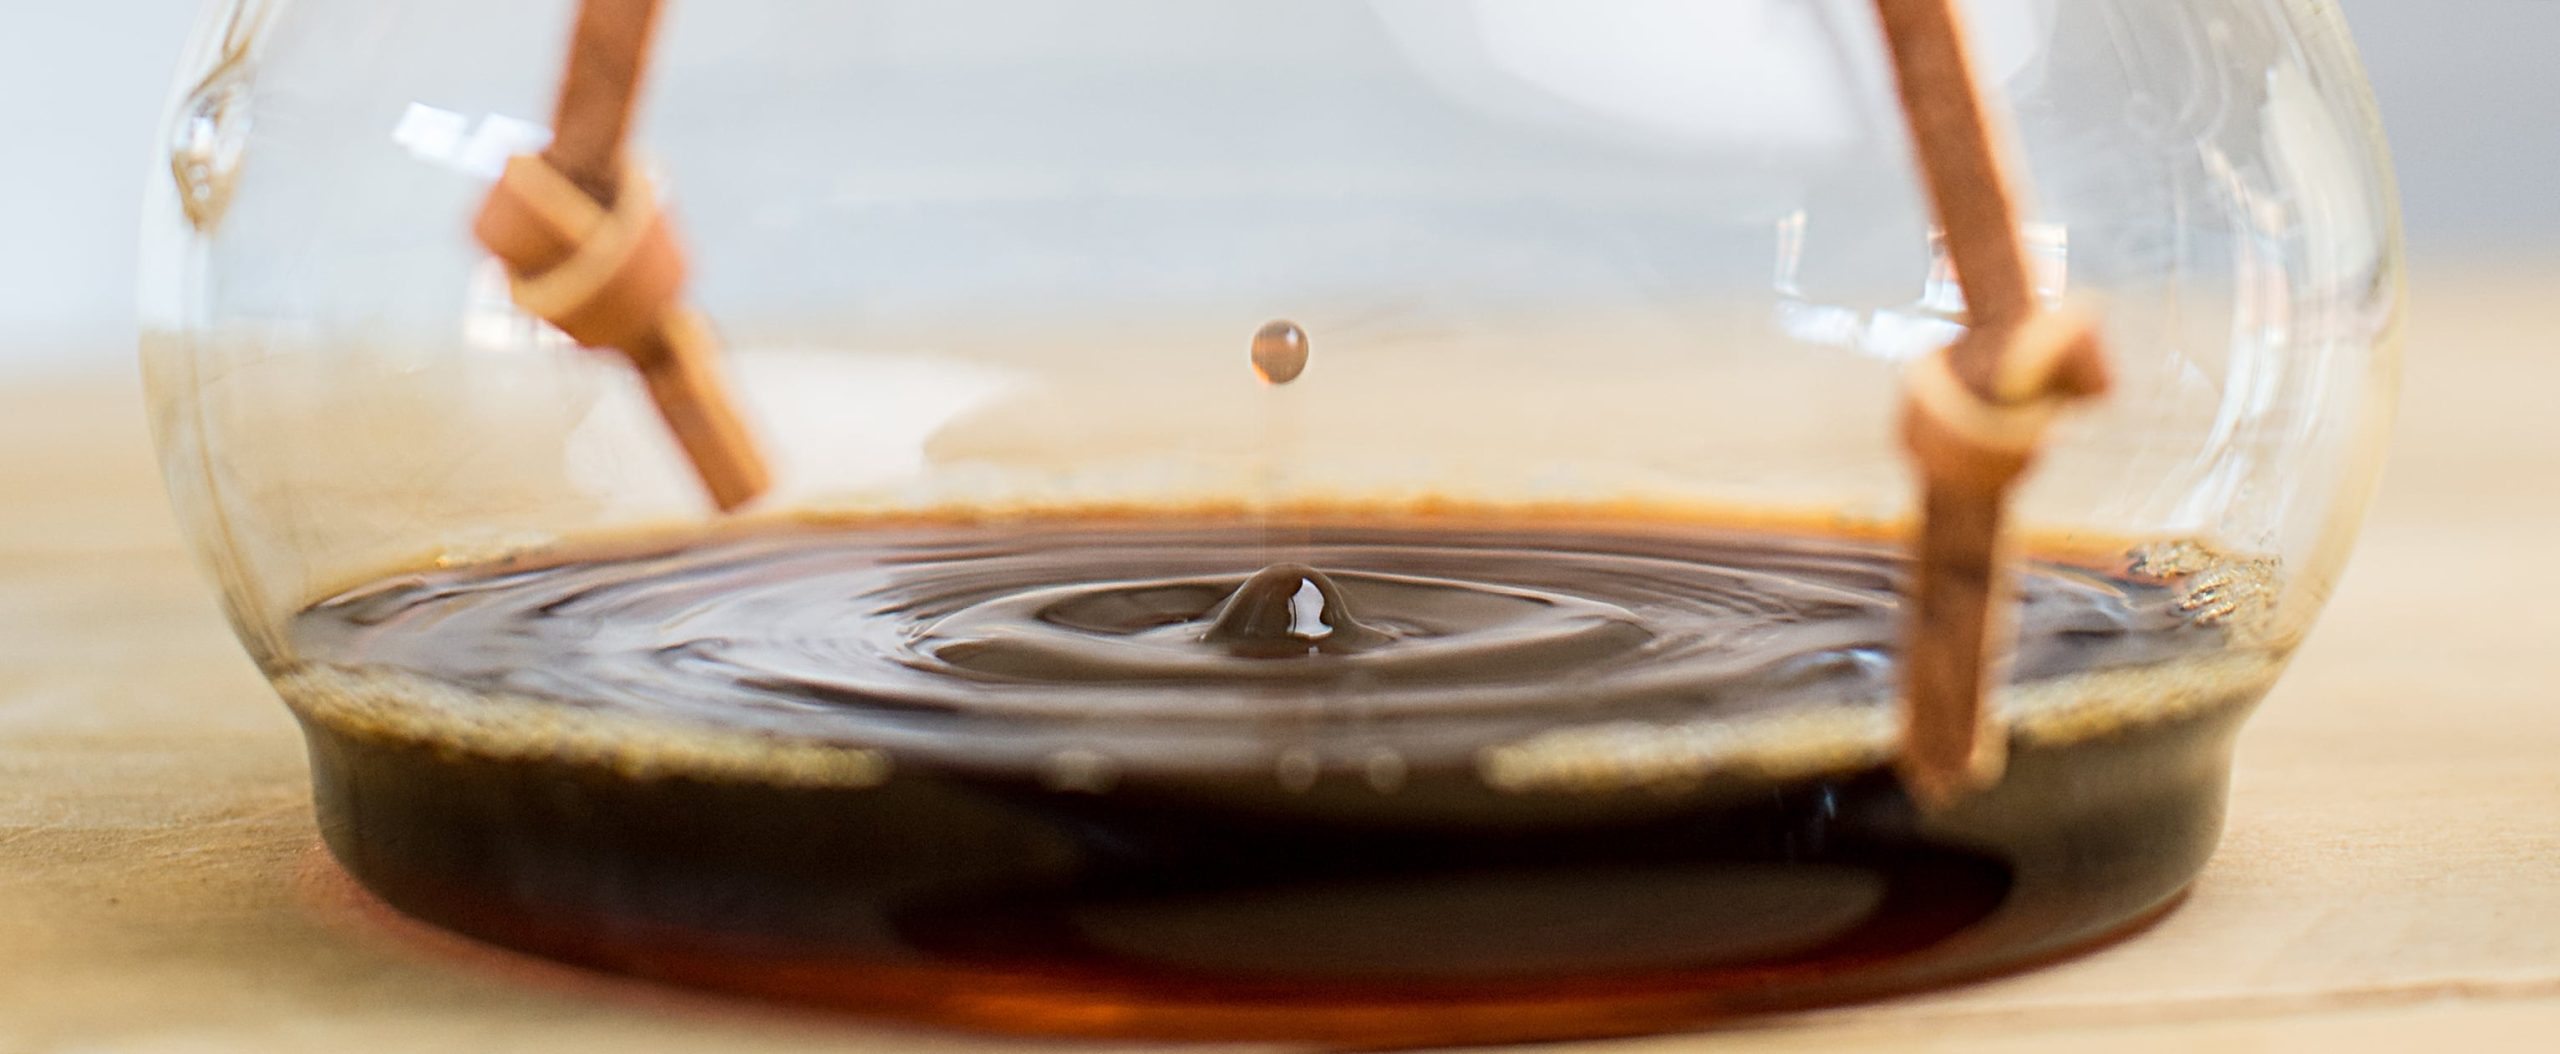 coffee dripping in a chemex